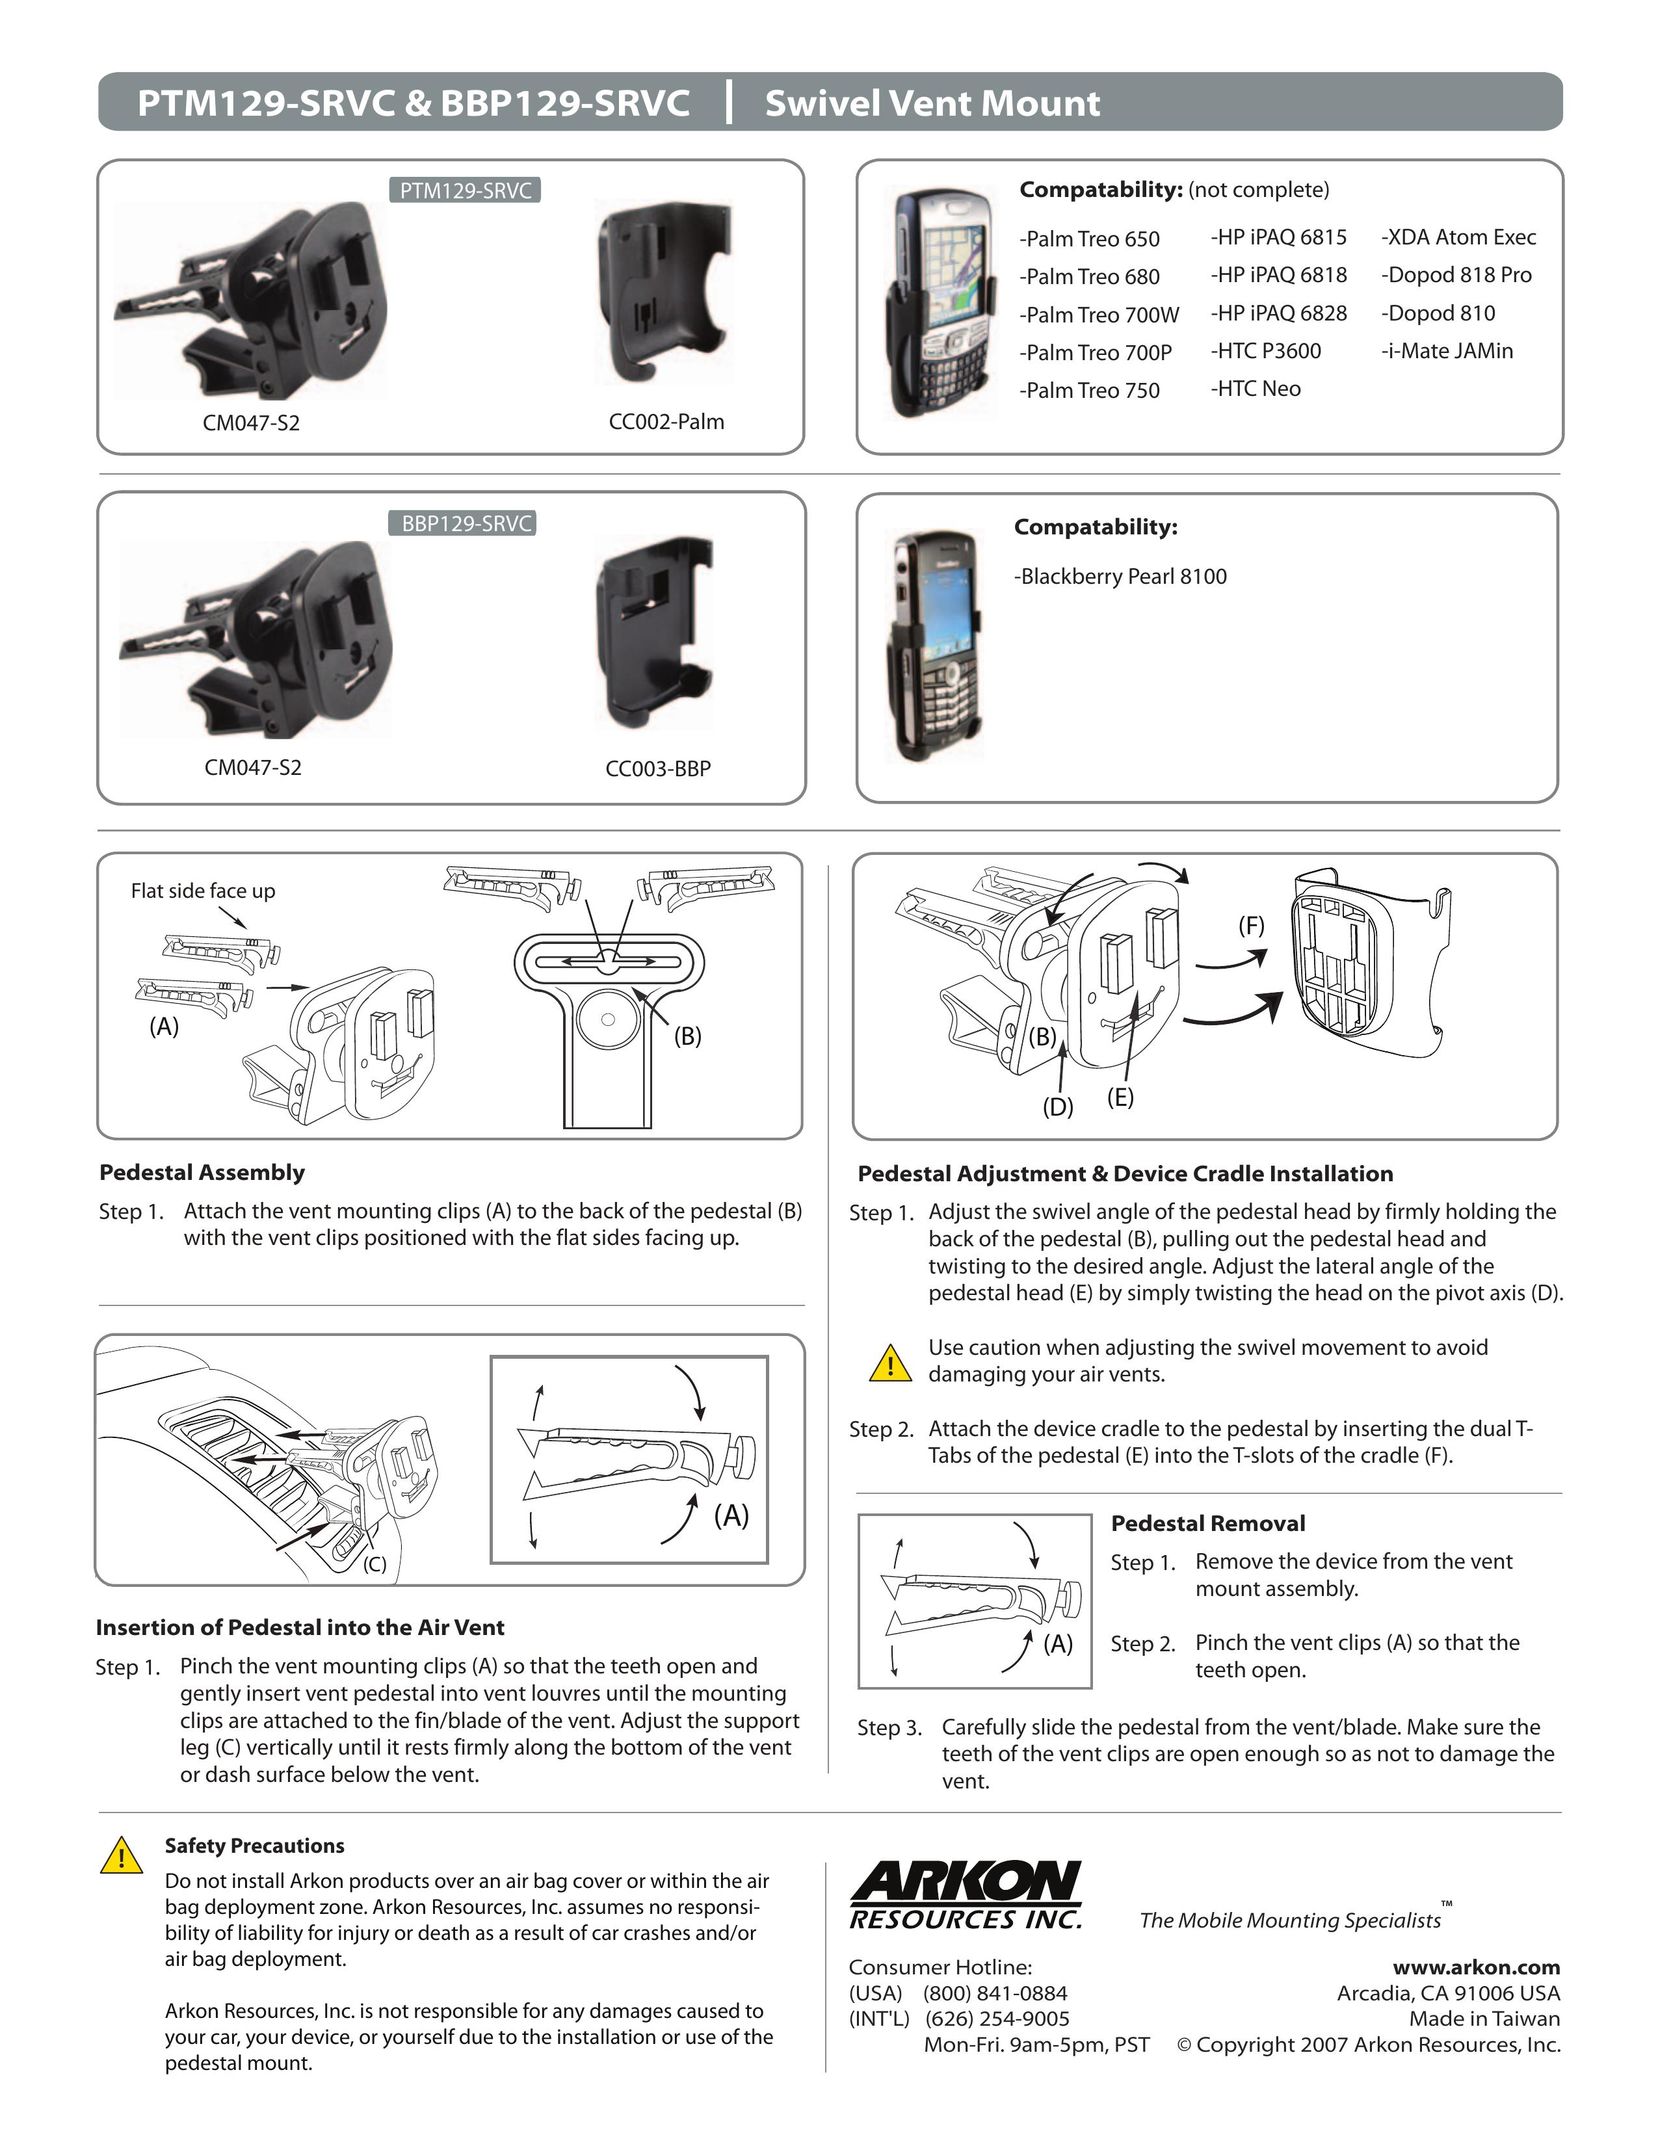 Avaya PTM129-SRVC TV Mount User Manual